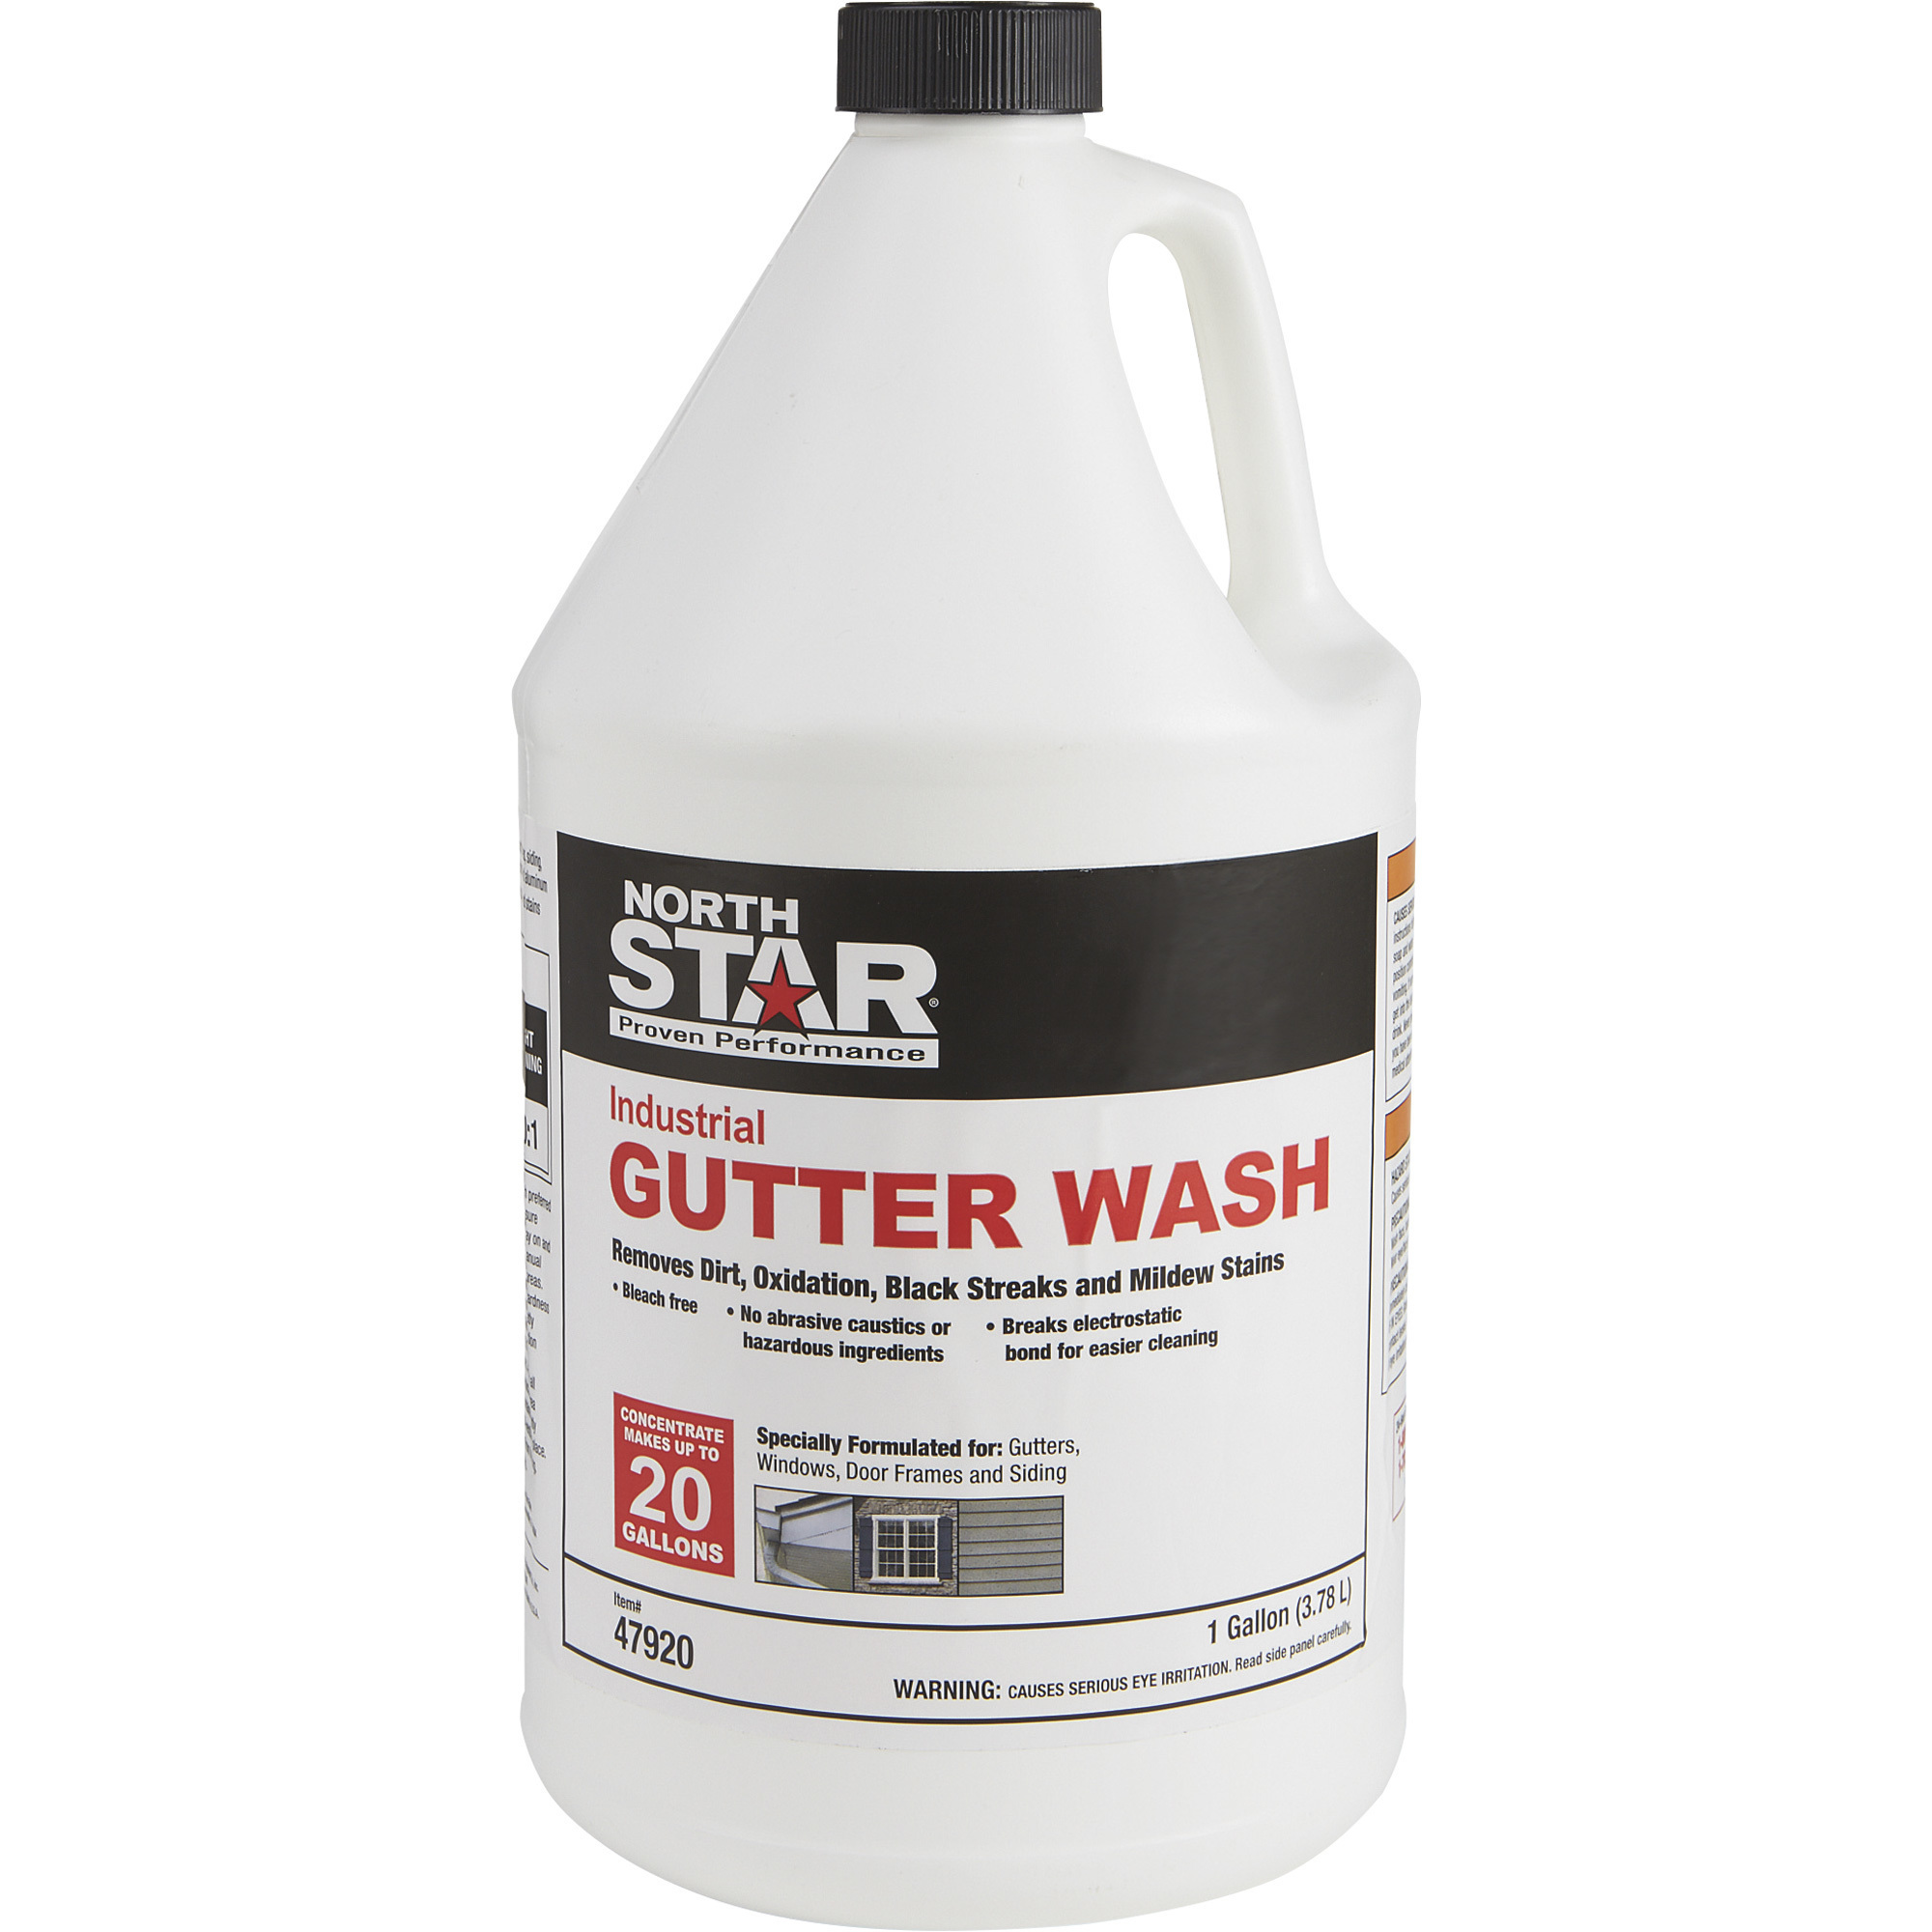 NorthStar Pressure Washer High-Performance Gutter Wash Concentrate â 1-Gallon, Model NSGW1